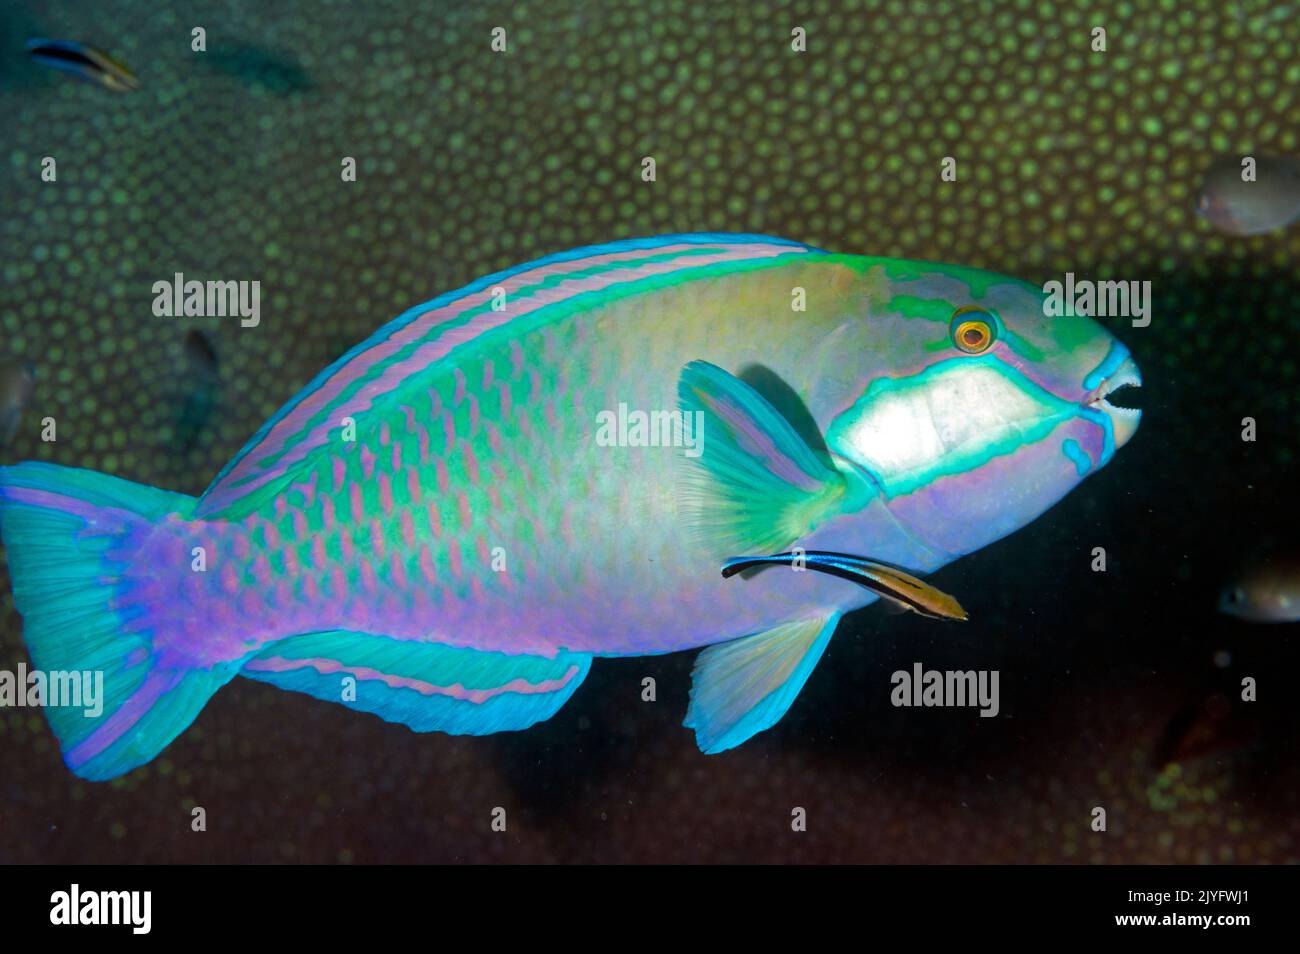 Bleeker's parrot fish, Chlorurus bleekeri, Raja Anpat Indonesia Stock Photo